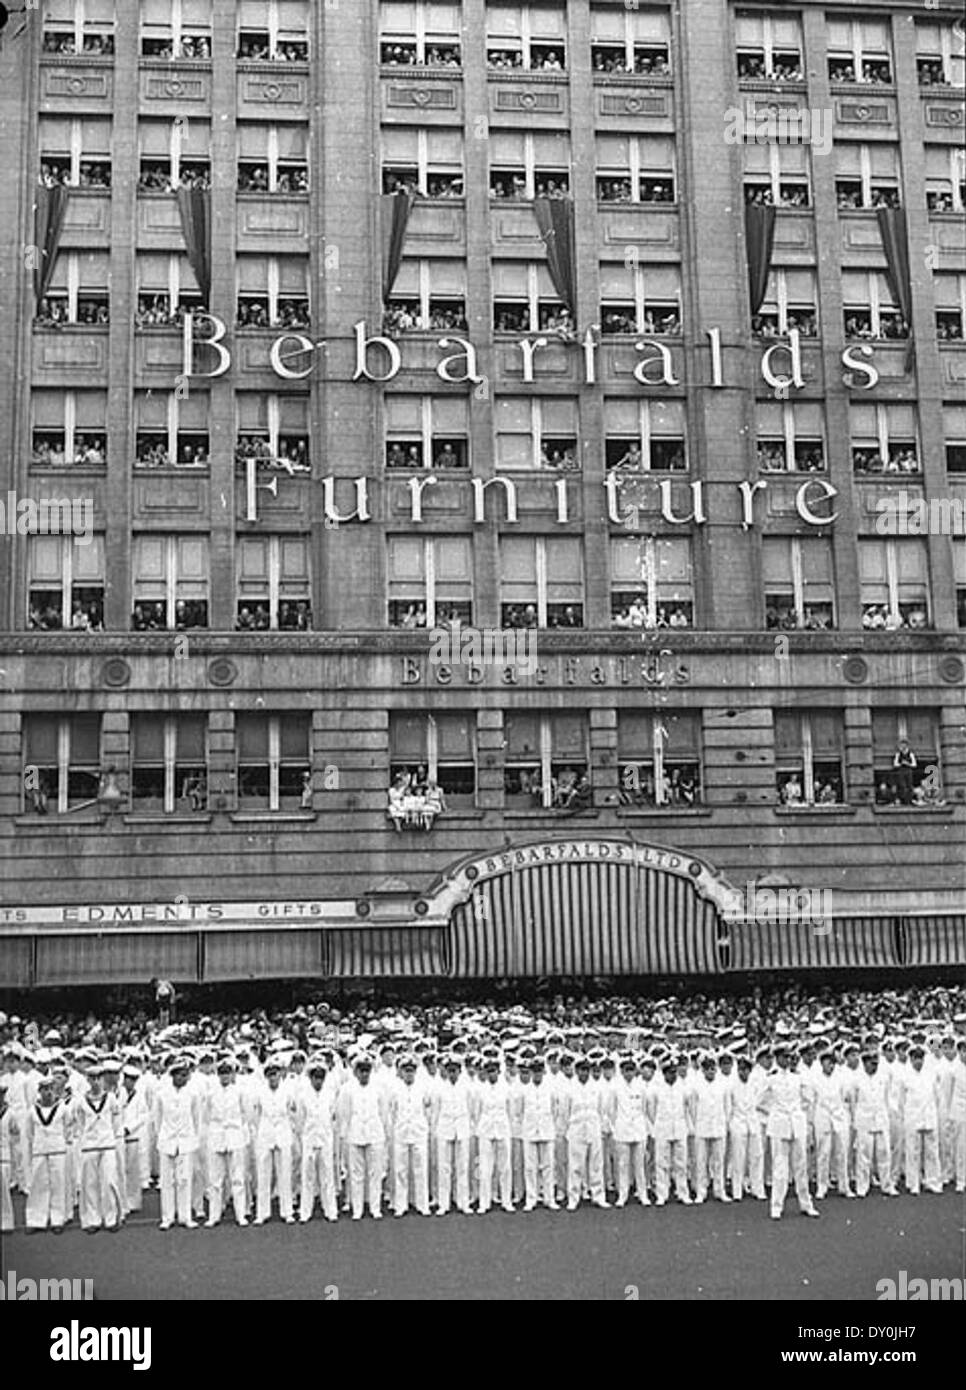 Bebarfald's Building, George St, Sydney (naval display outside), 11 February 1941 Stock Photo